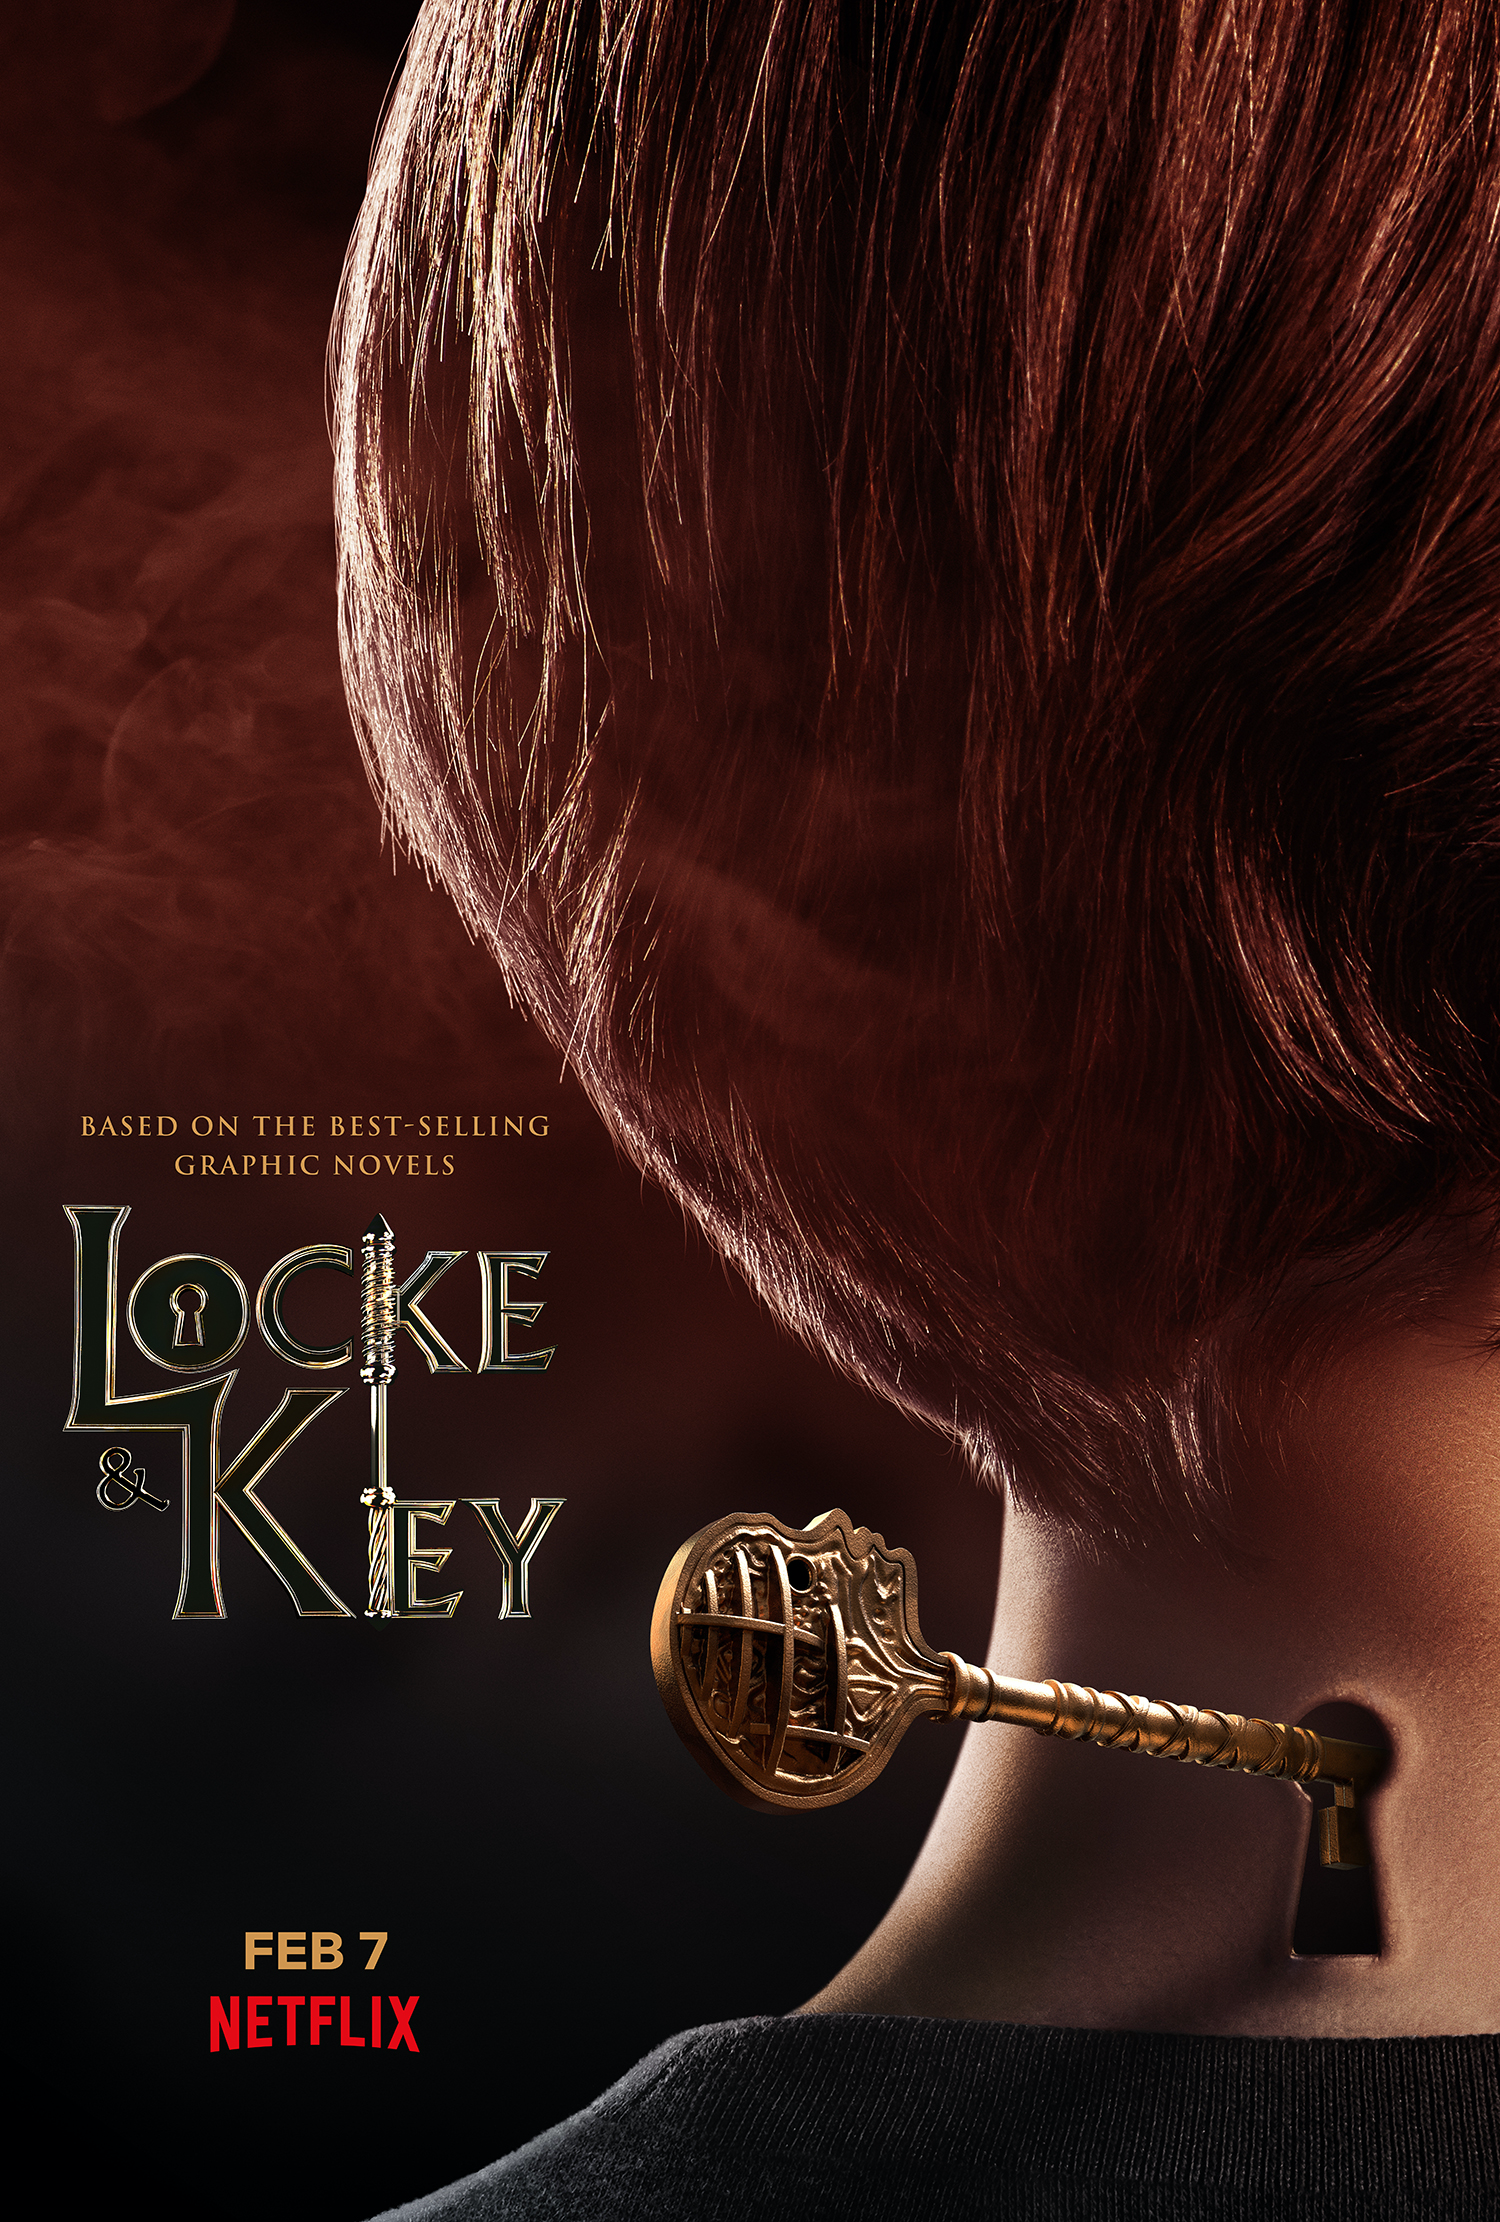 Locke & Key, a Netflix Original Series